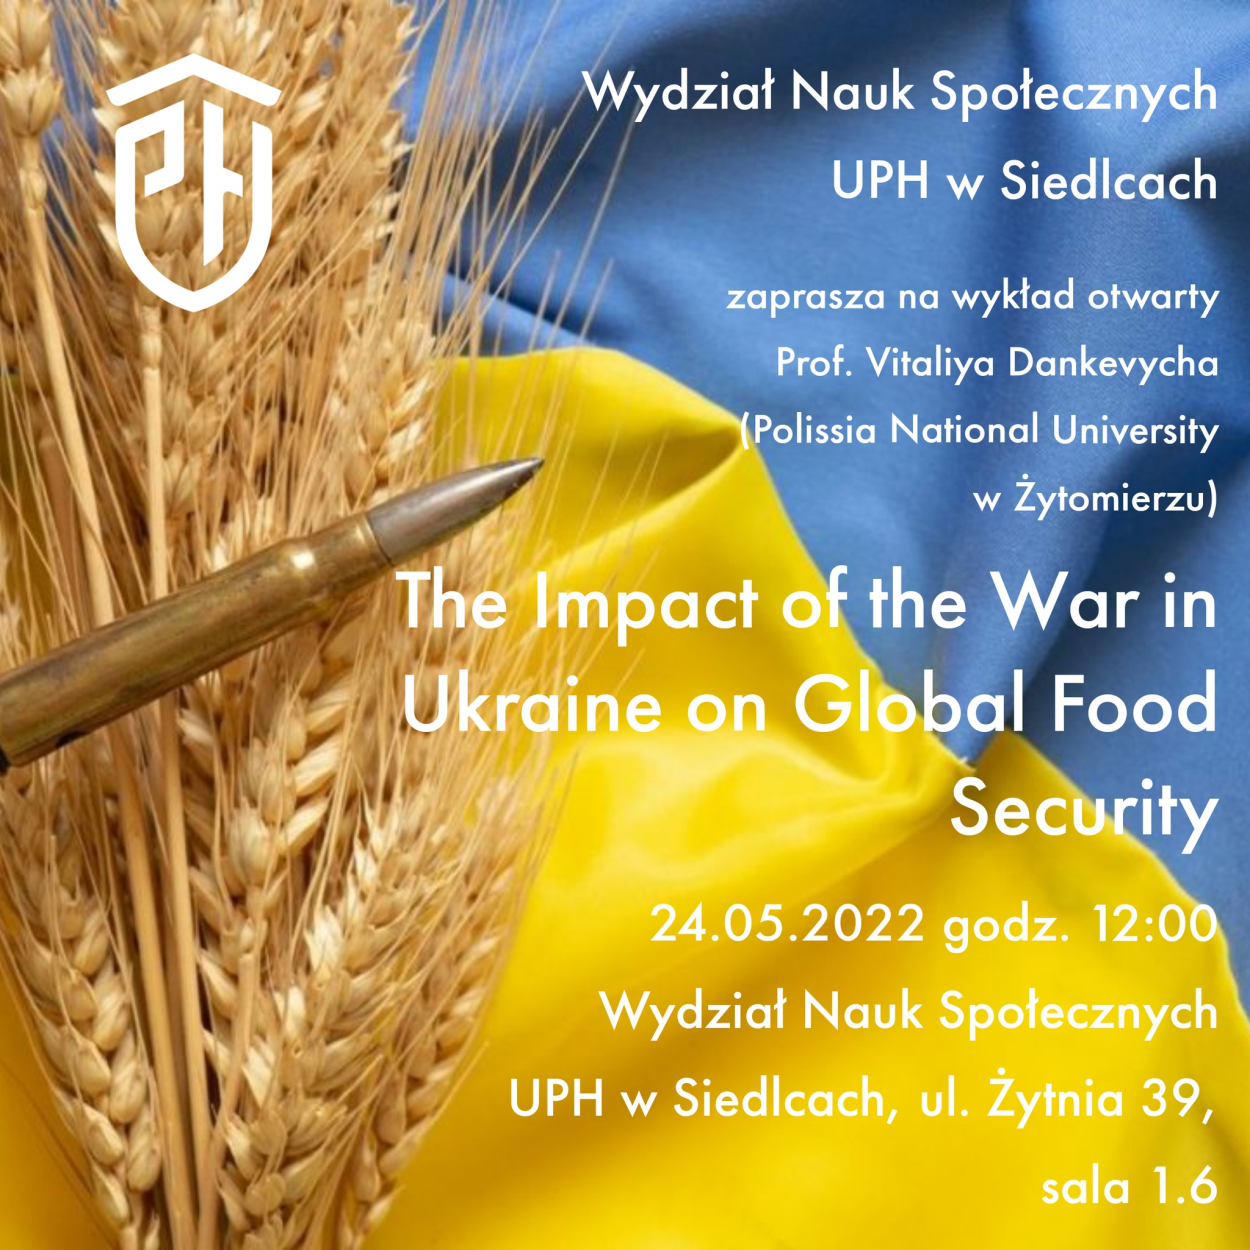 Wykład otwarty prof. Vitaliya Dankevicha z Polissia National University, Ukraine, pt. "The Impact of the War in Ukraine on Global Food Security"